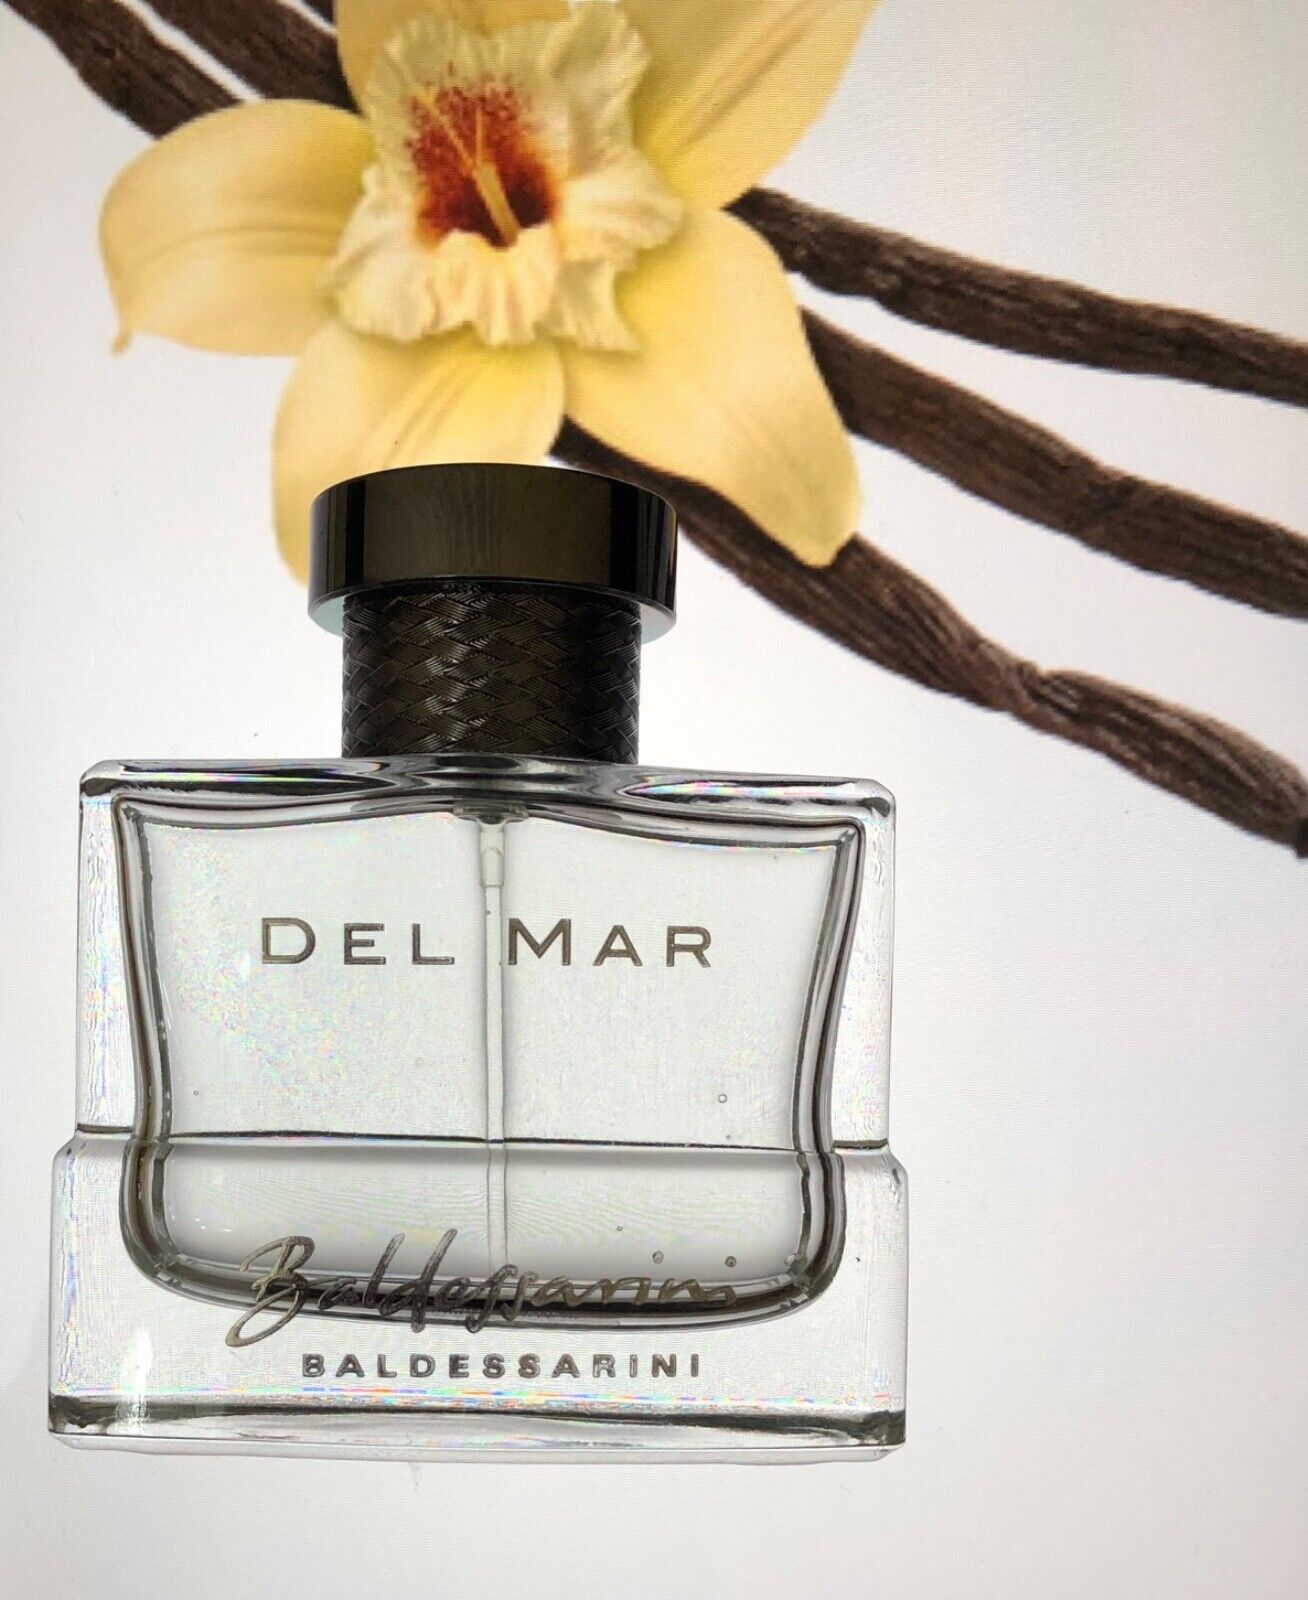 Discontinued Baldessarini del Mar spray edt 23 ml left men perfume by Hugo Boss 